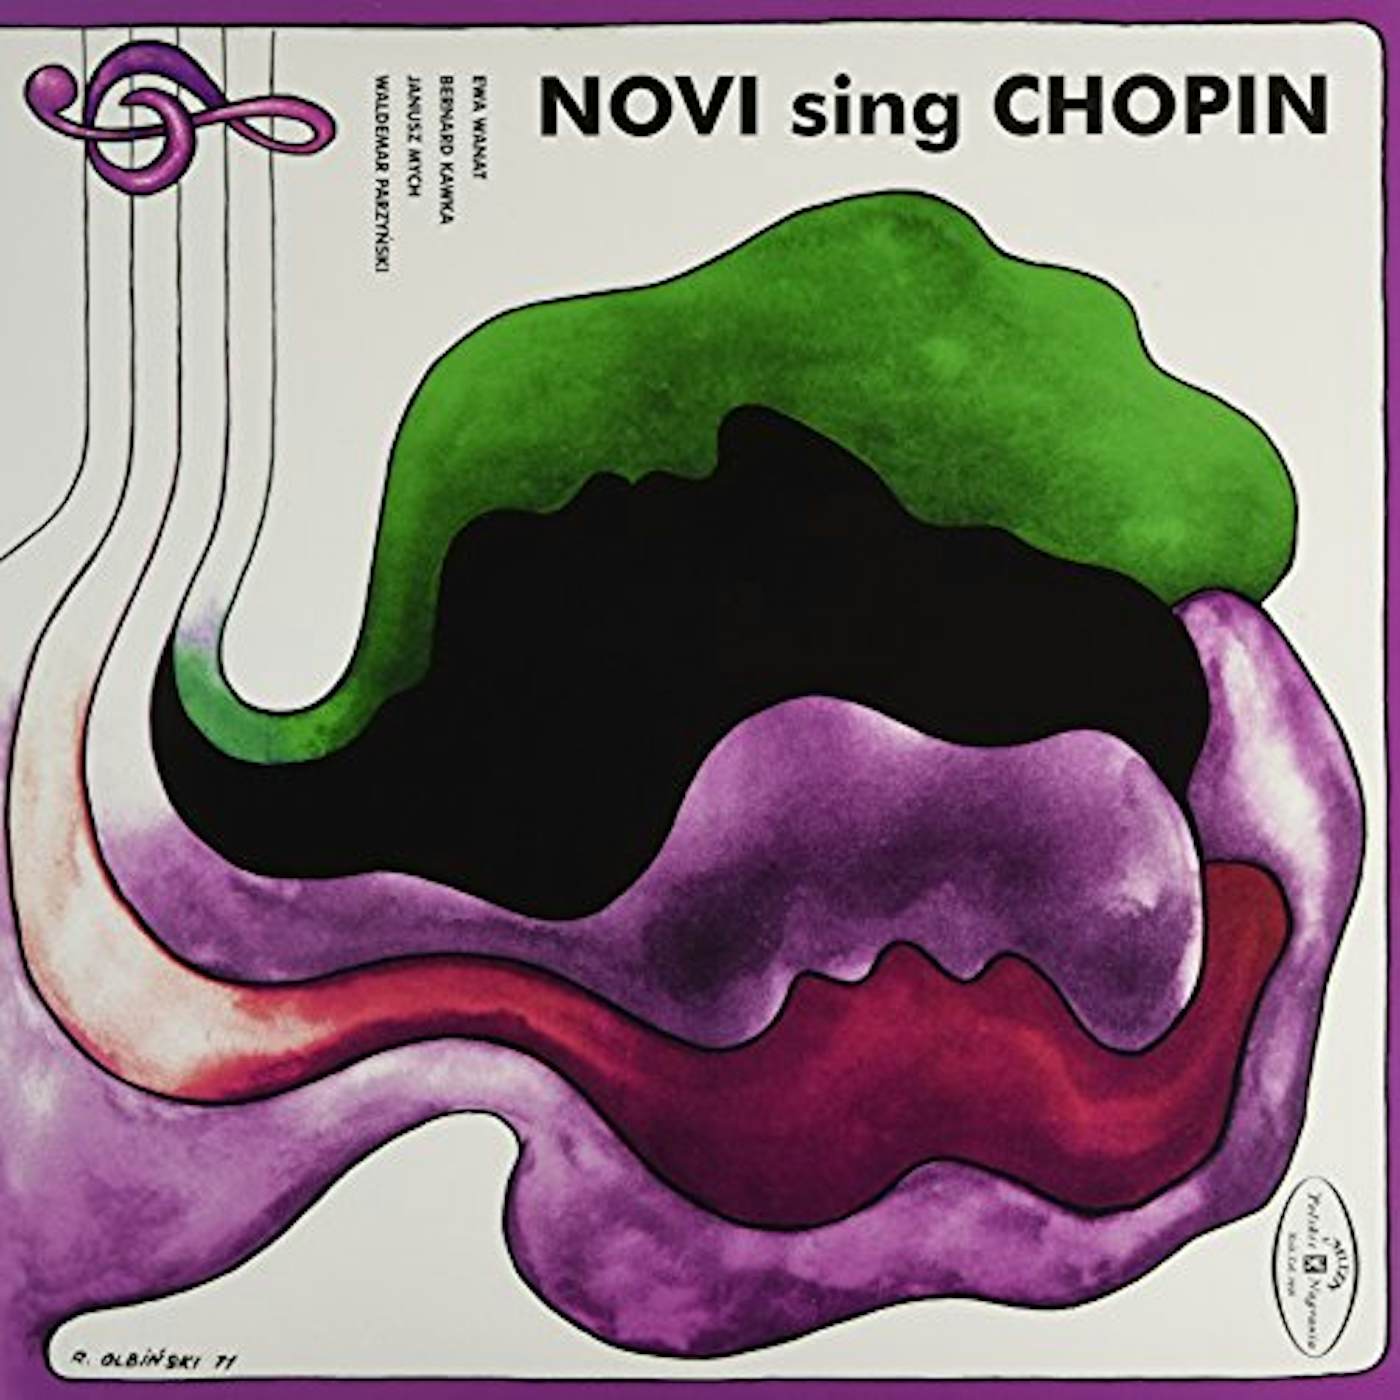 Novi Singers CHOPIN Vinyl Record